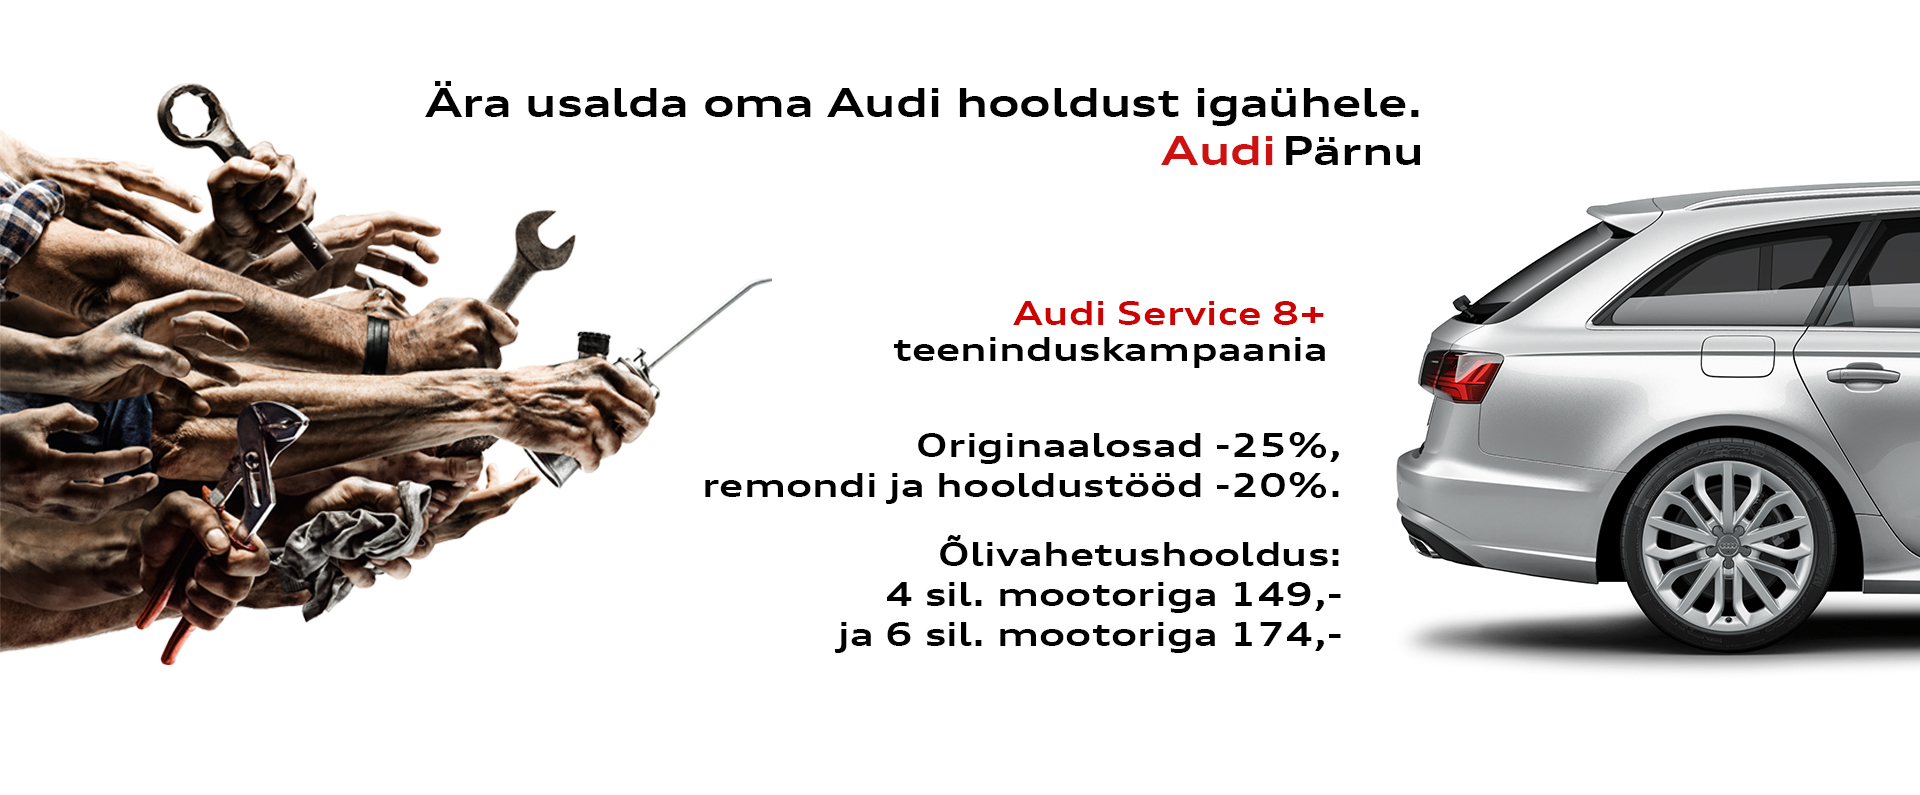 Audi_Service 8+FB copy2023.jpg